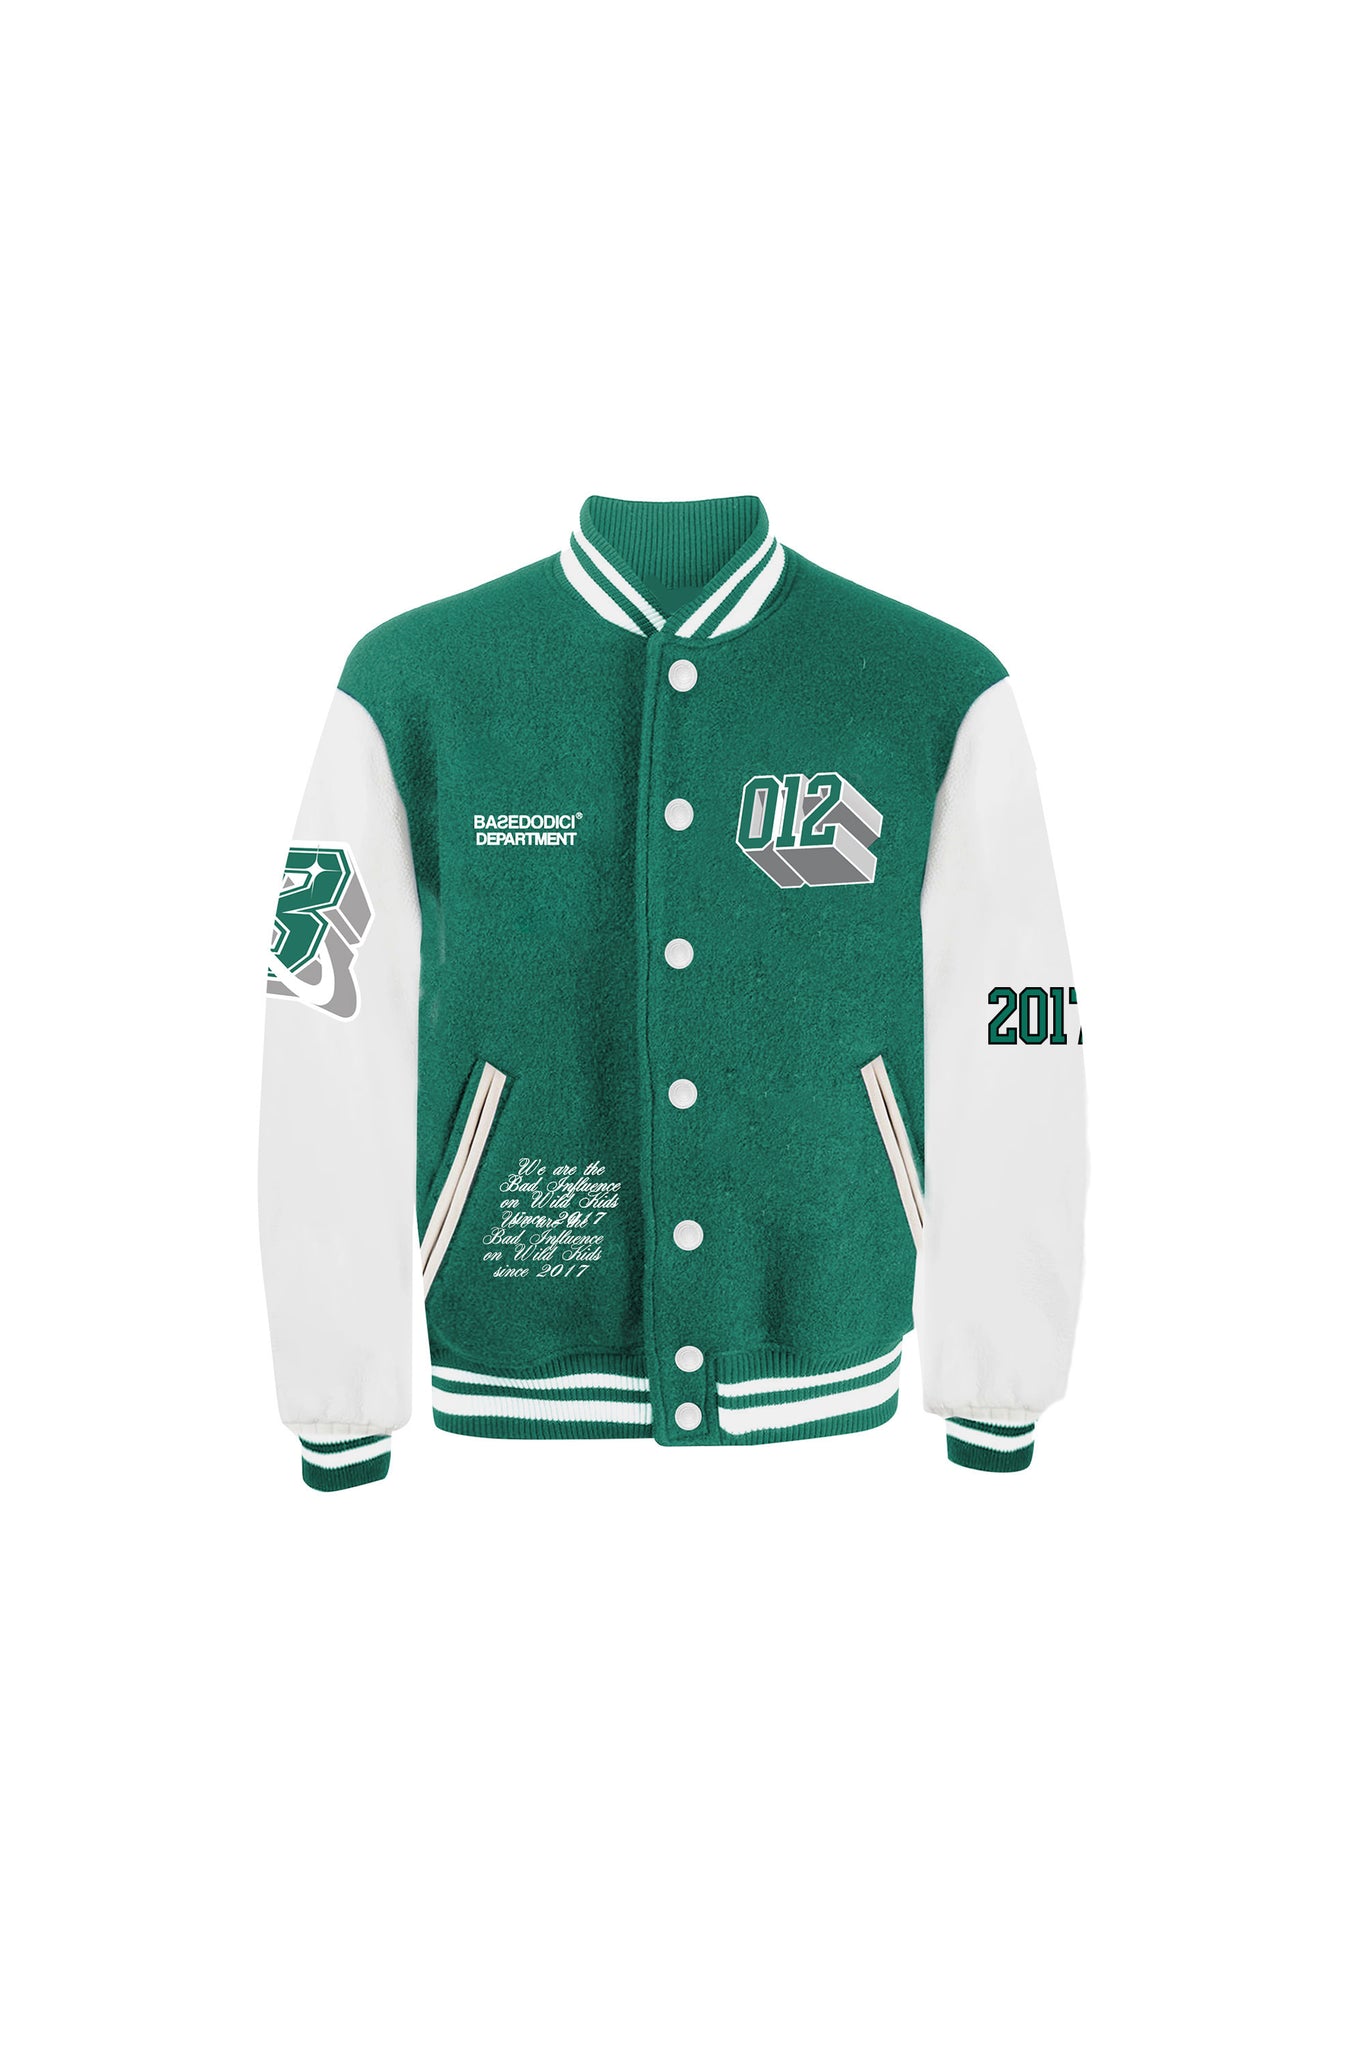 College Jacket “BADINFLUENCE” Green